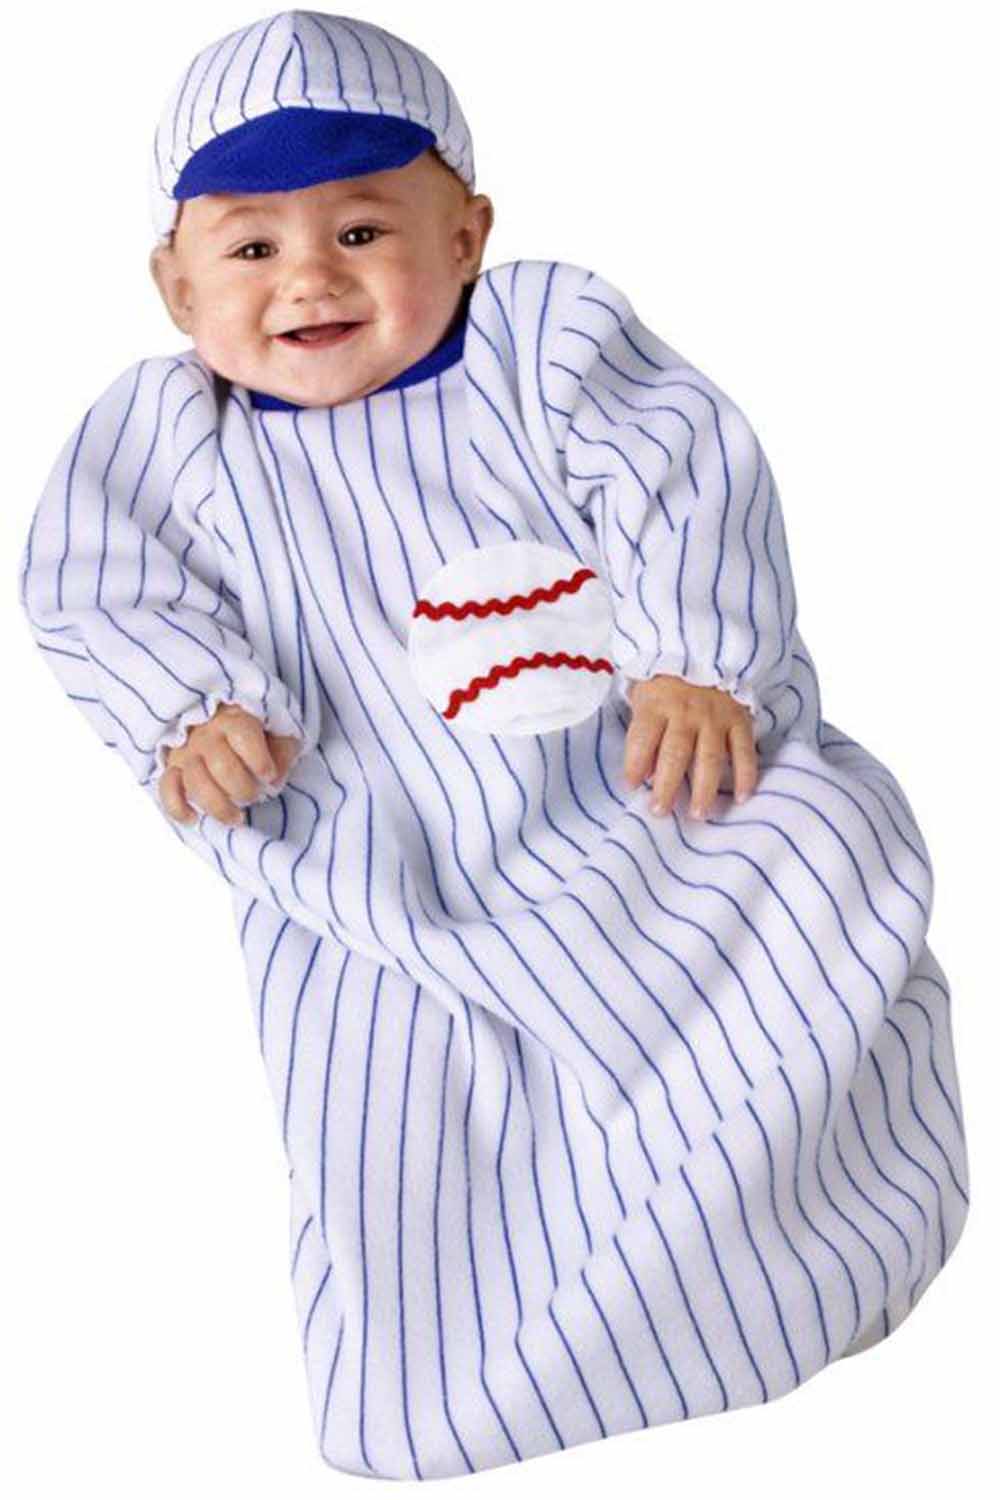 baby baseball costume